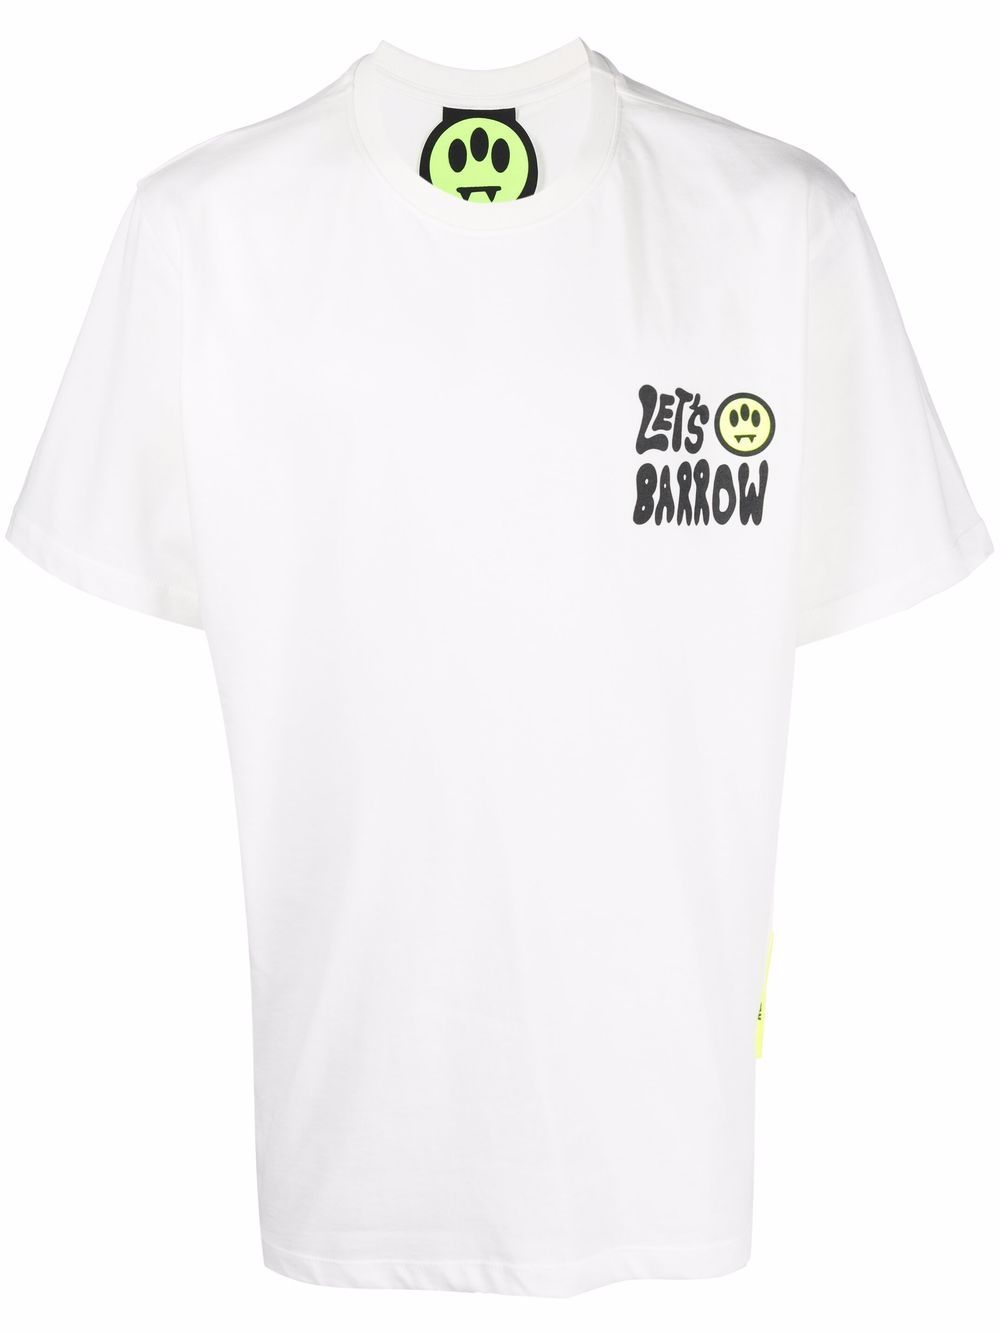 фото Barrow футболка с логотипом